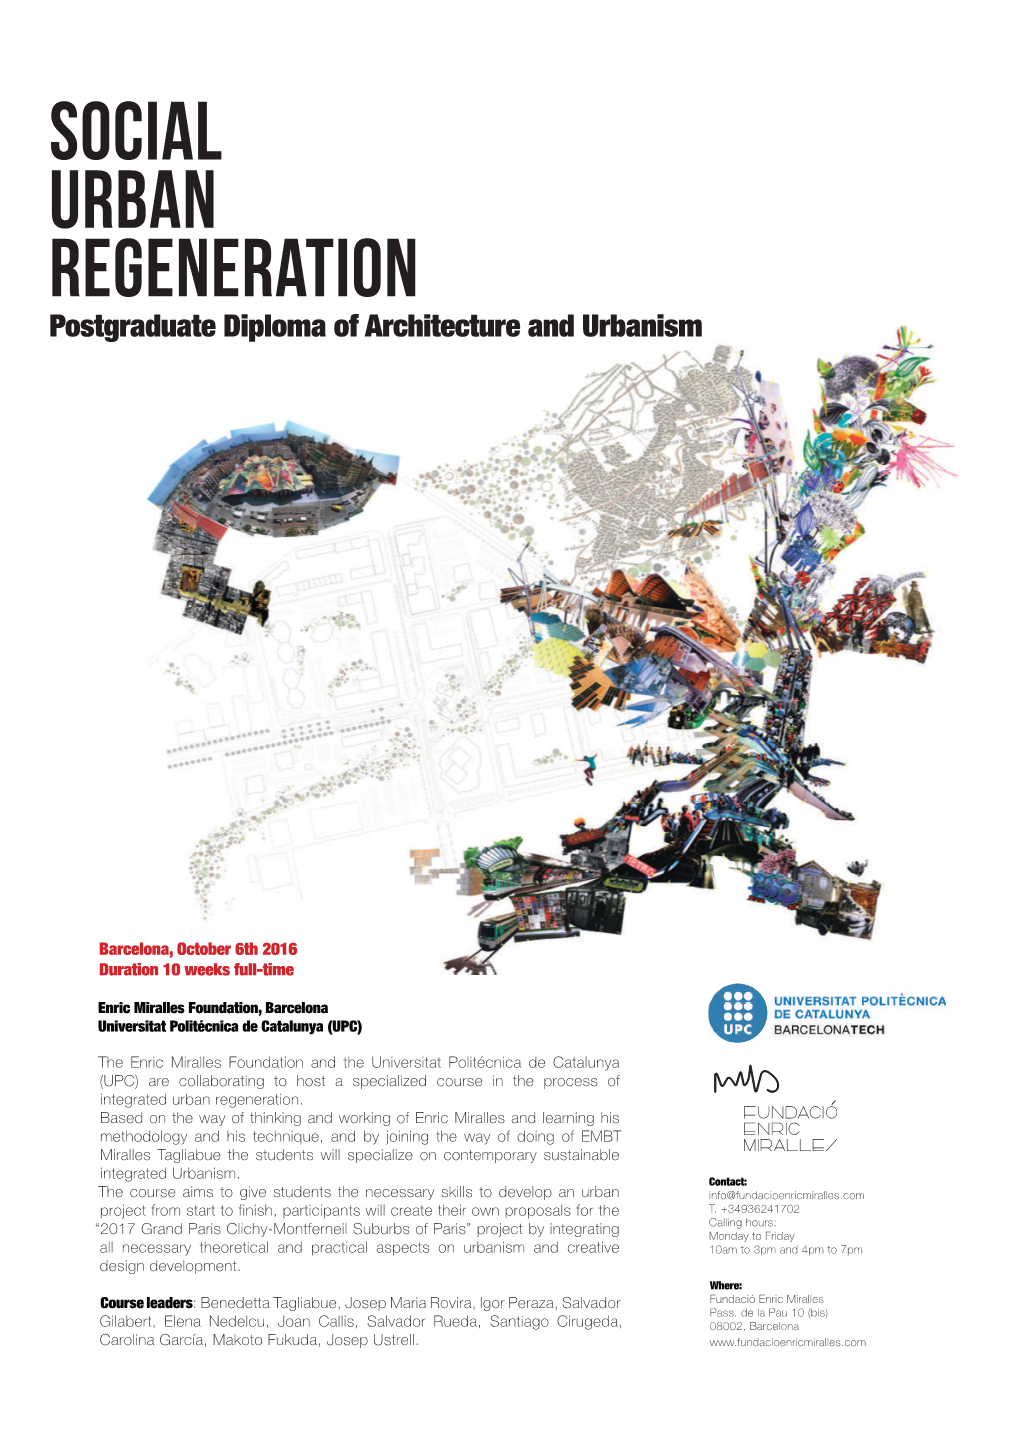 SOCIAL URBAN REGENERATION Postgraduate Diploma of Architecture and Urbanism